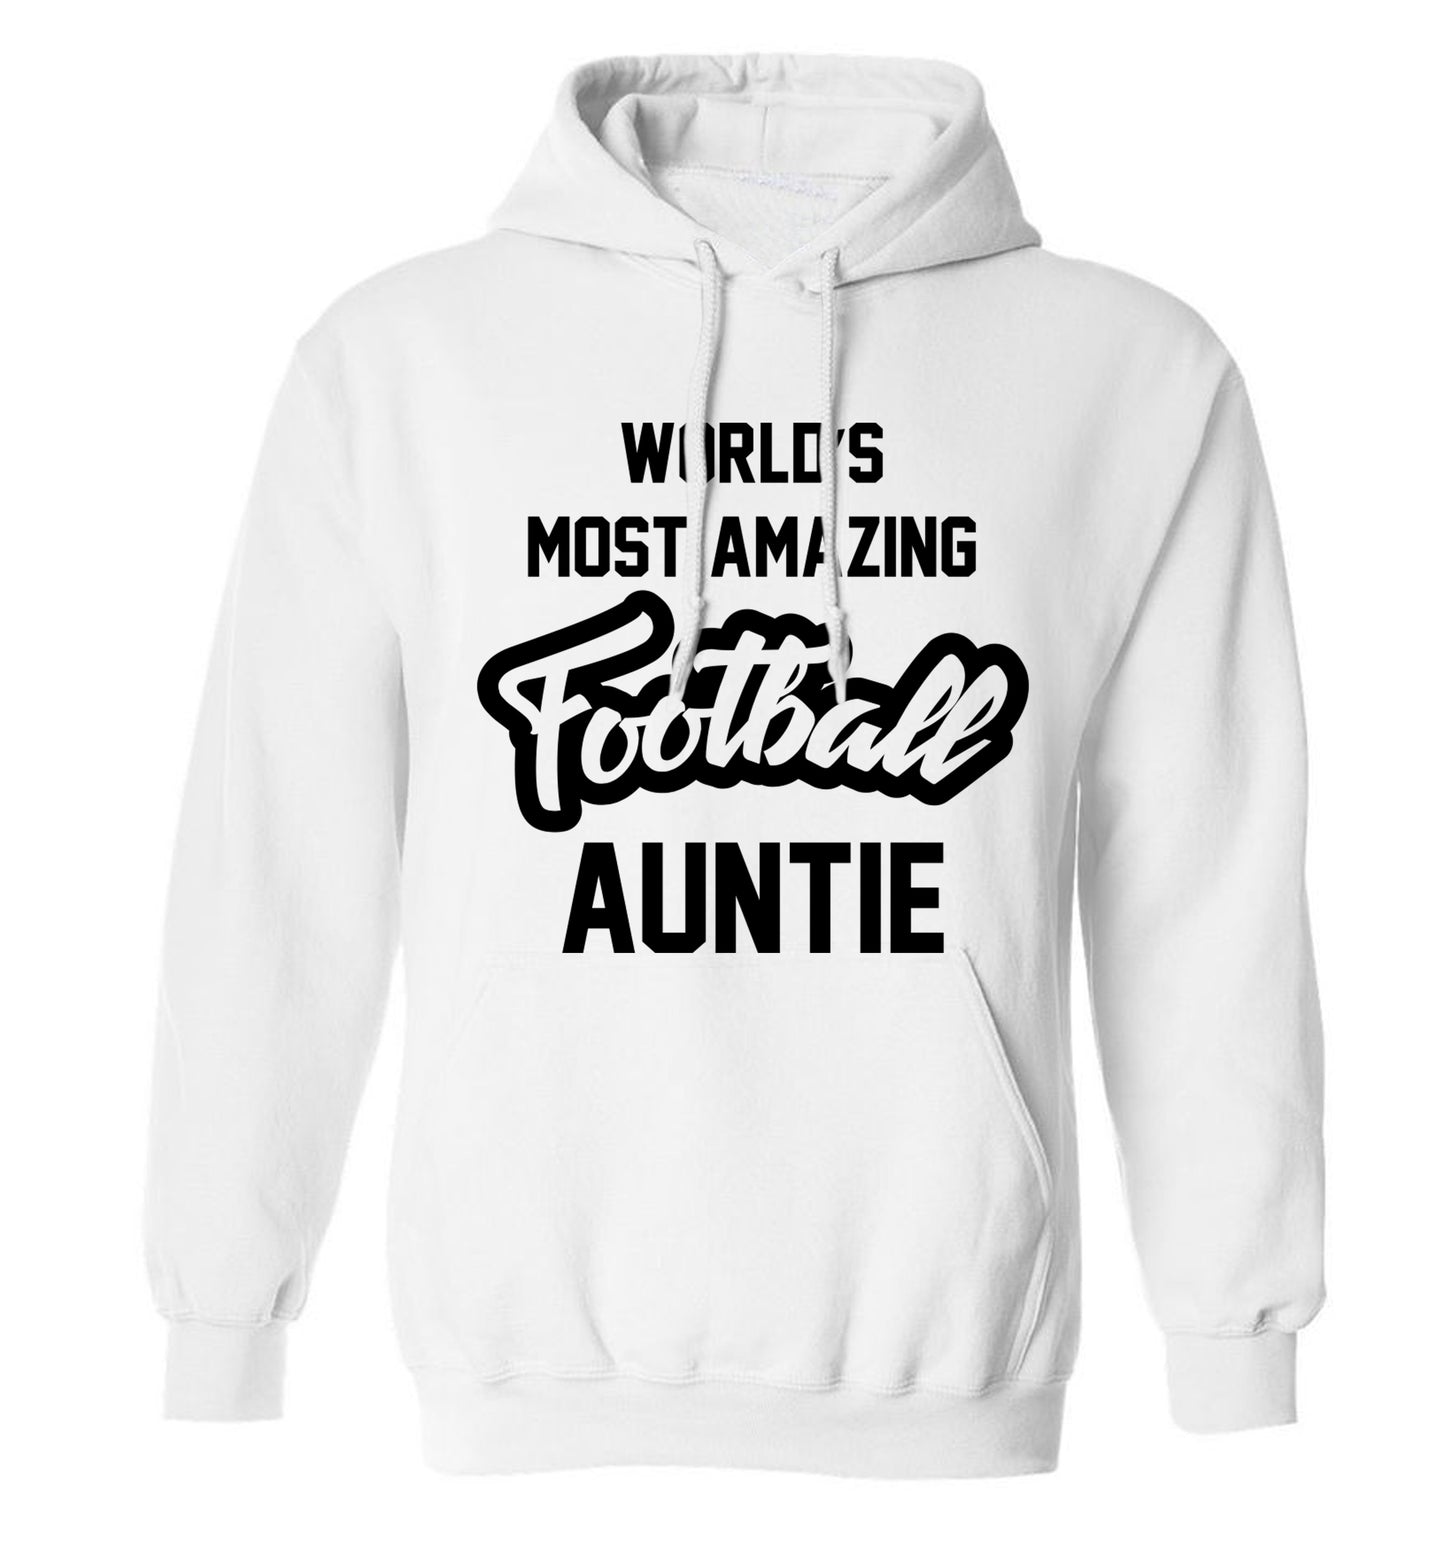 Worlds most amazing football auntie adults unisexwhite hoodie 2XL